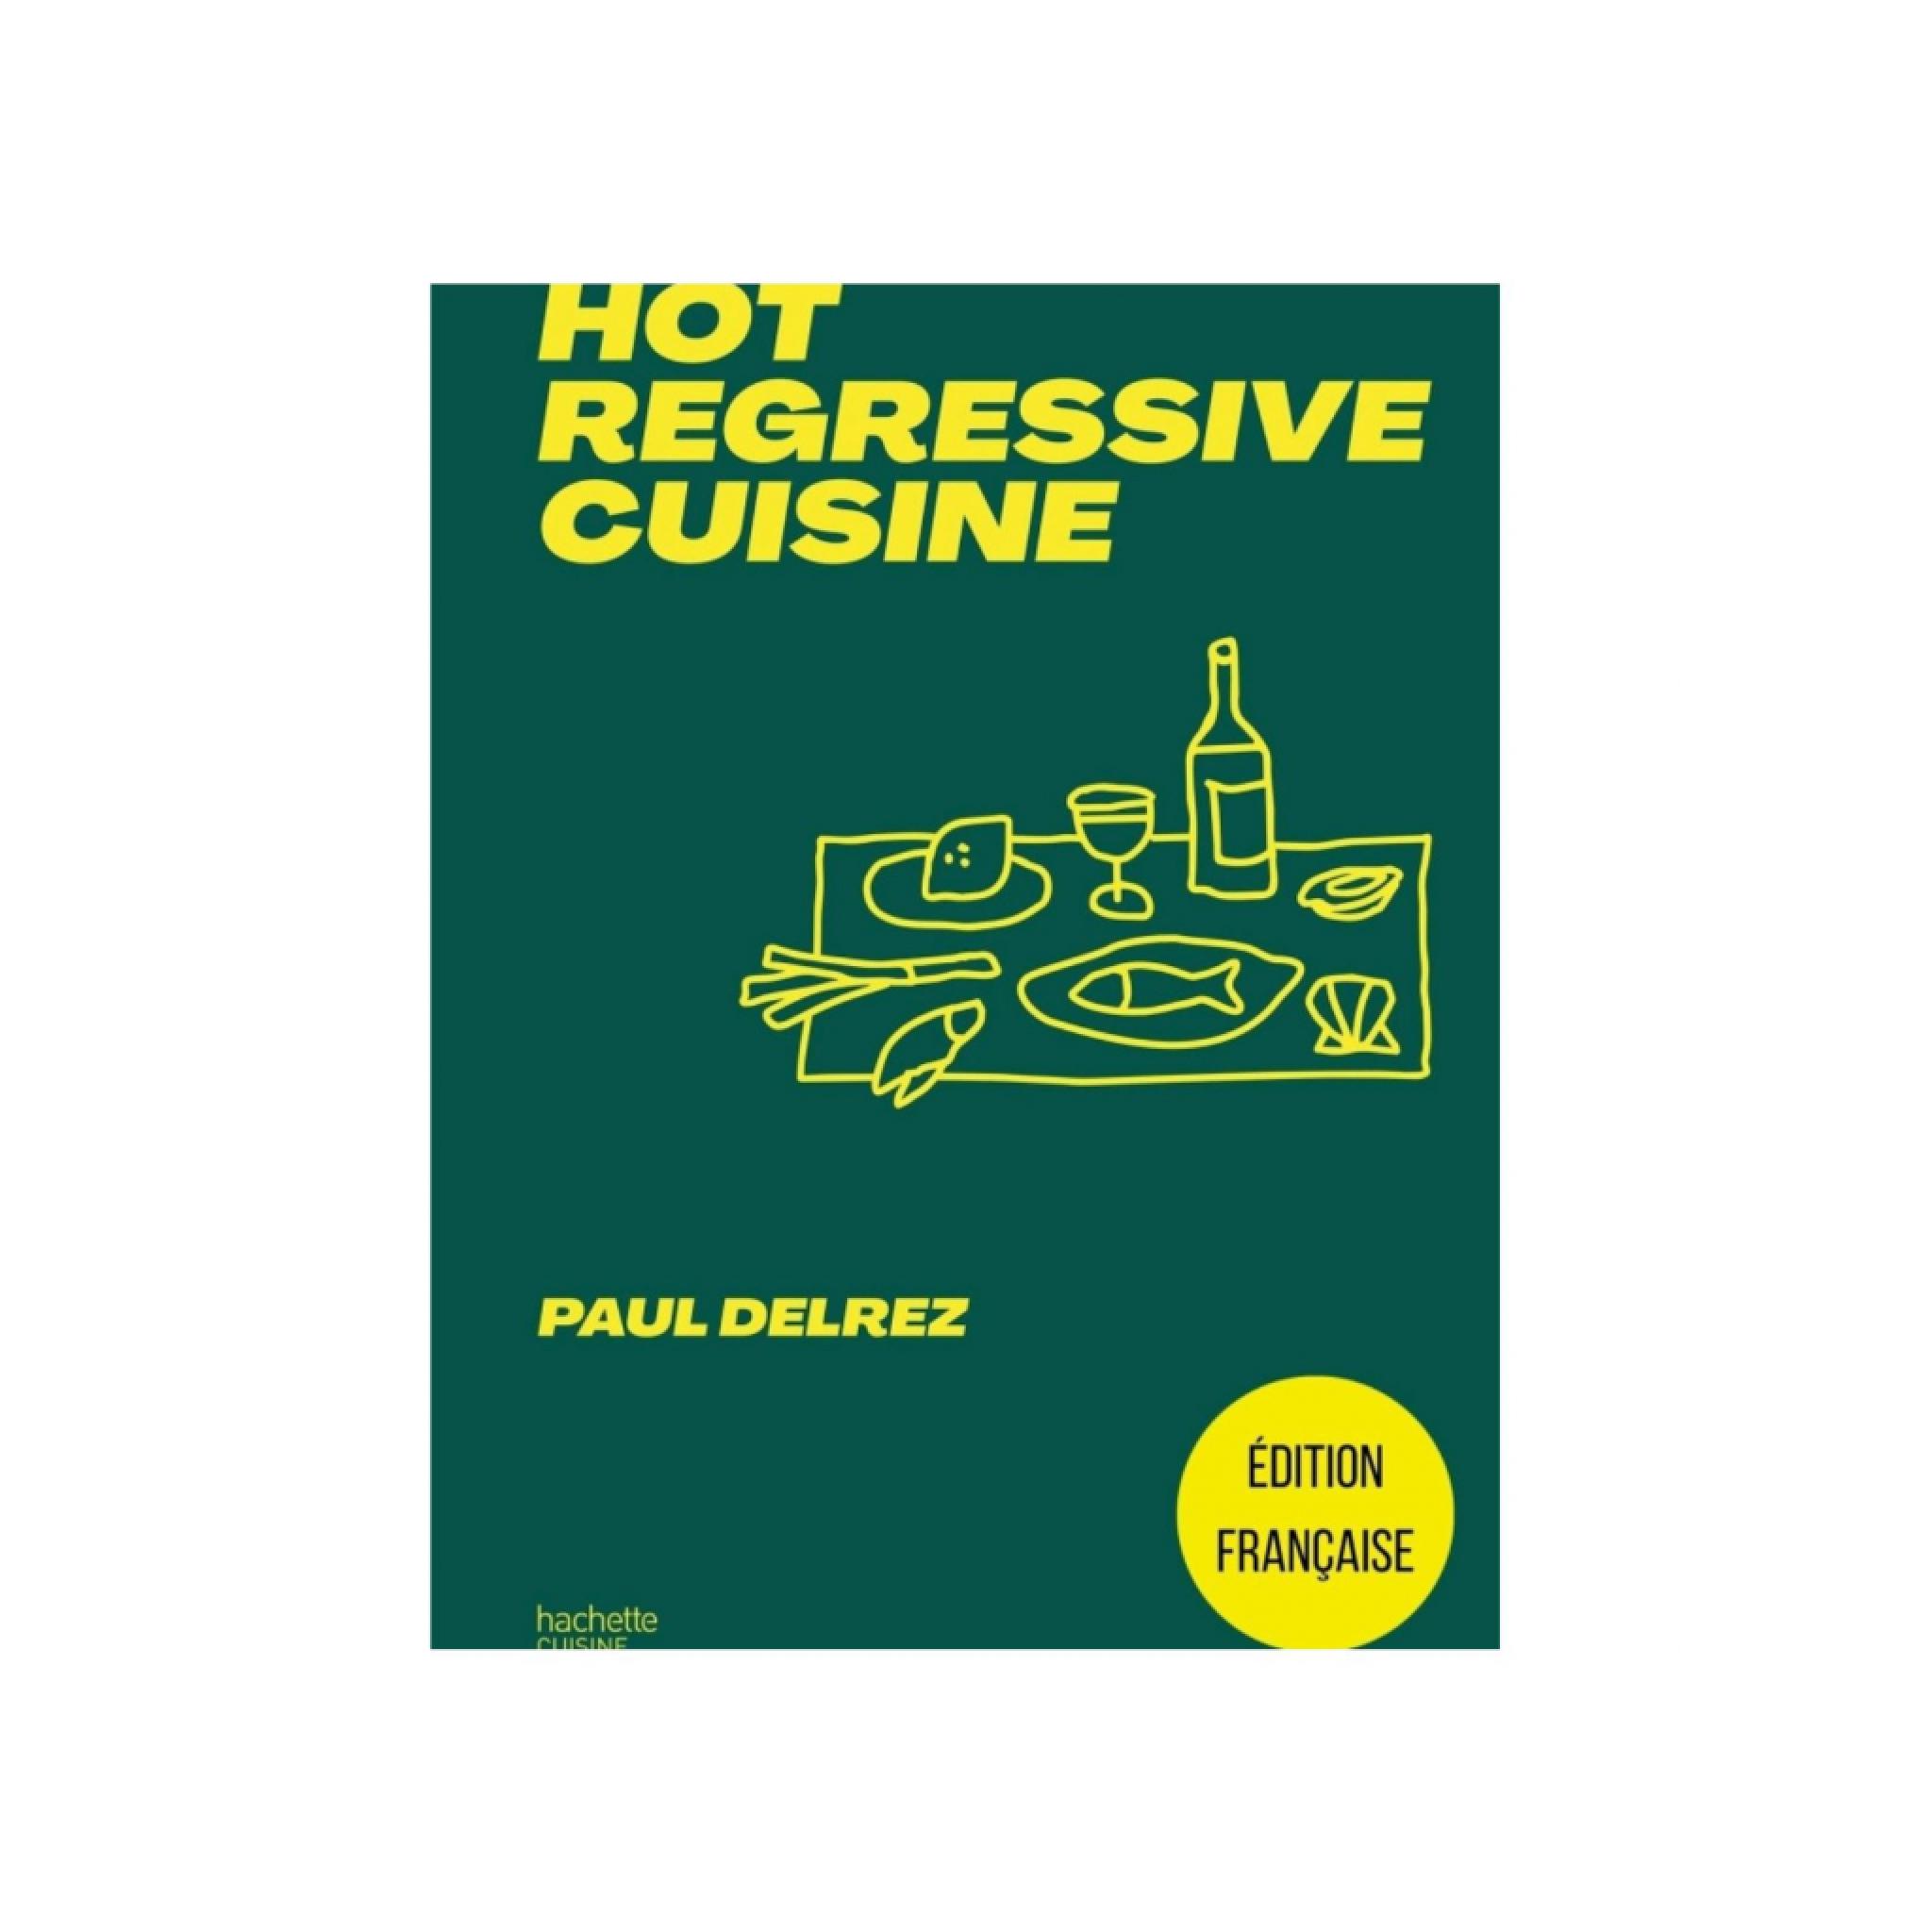 Hot Regressive Cuisine, Hachette, 35 €